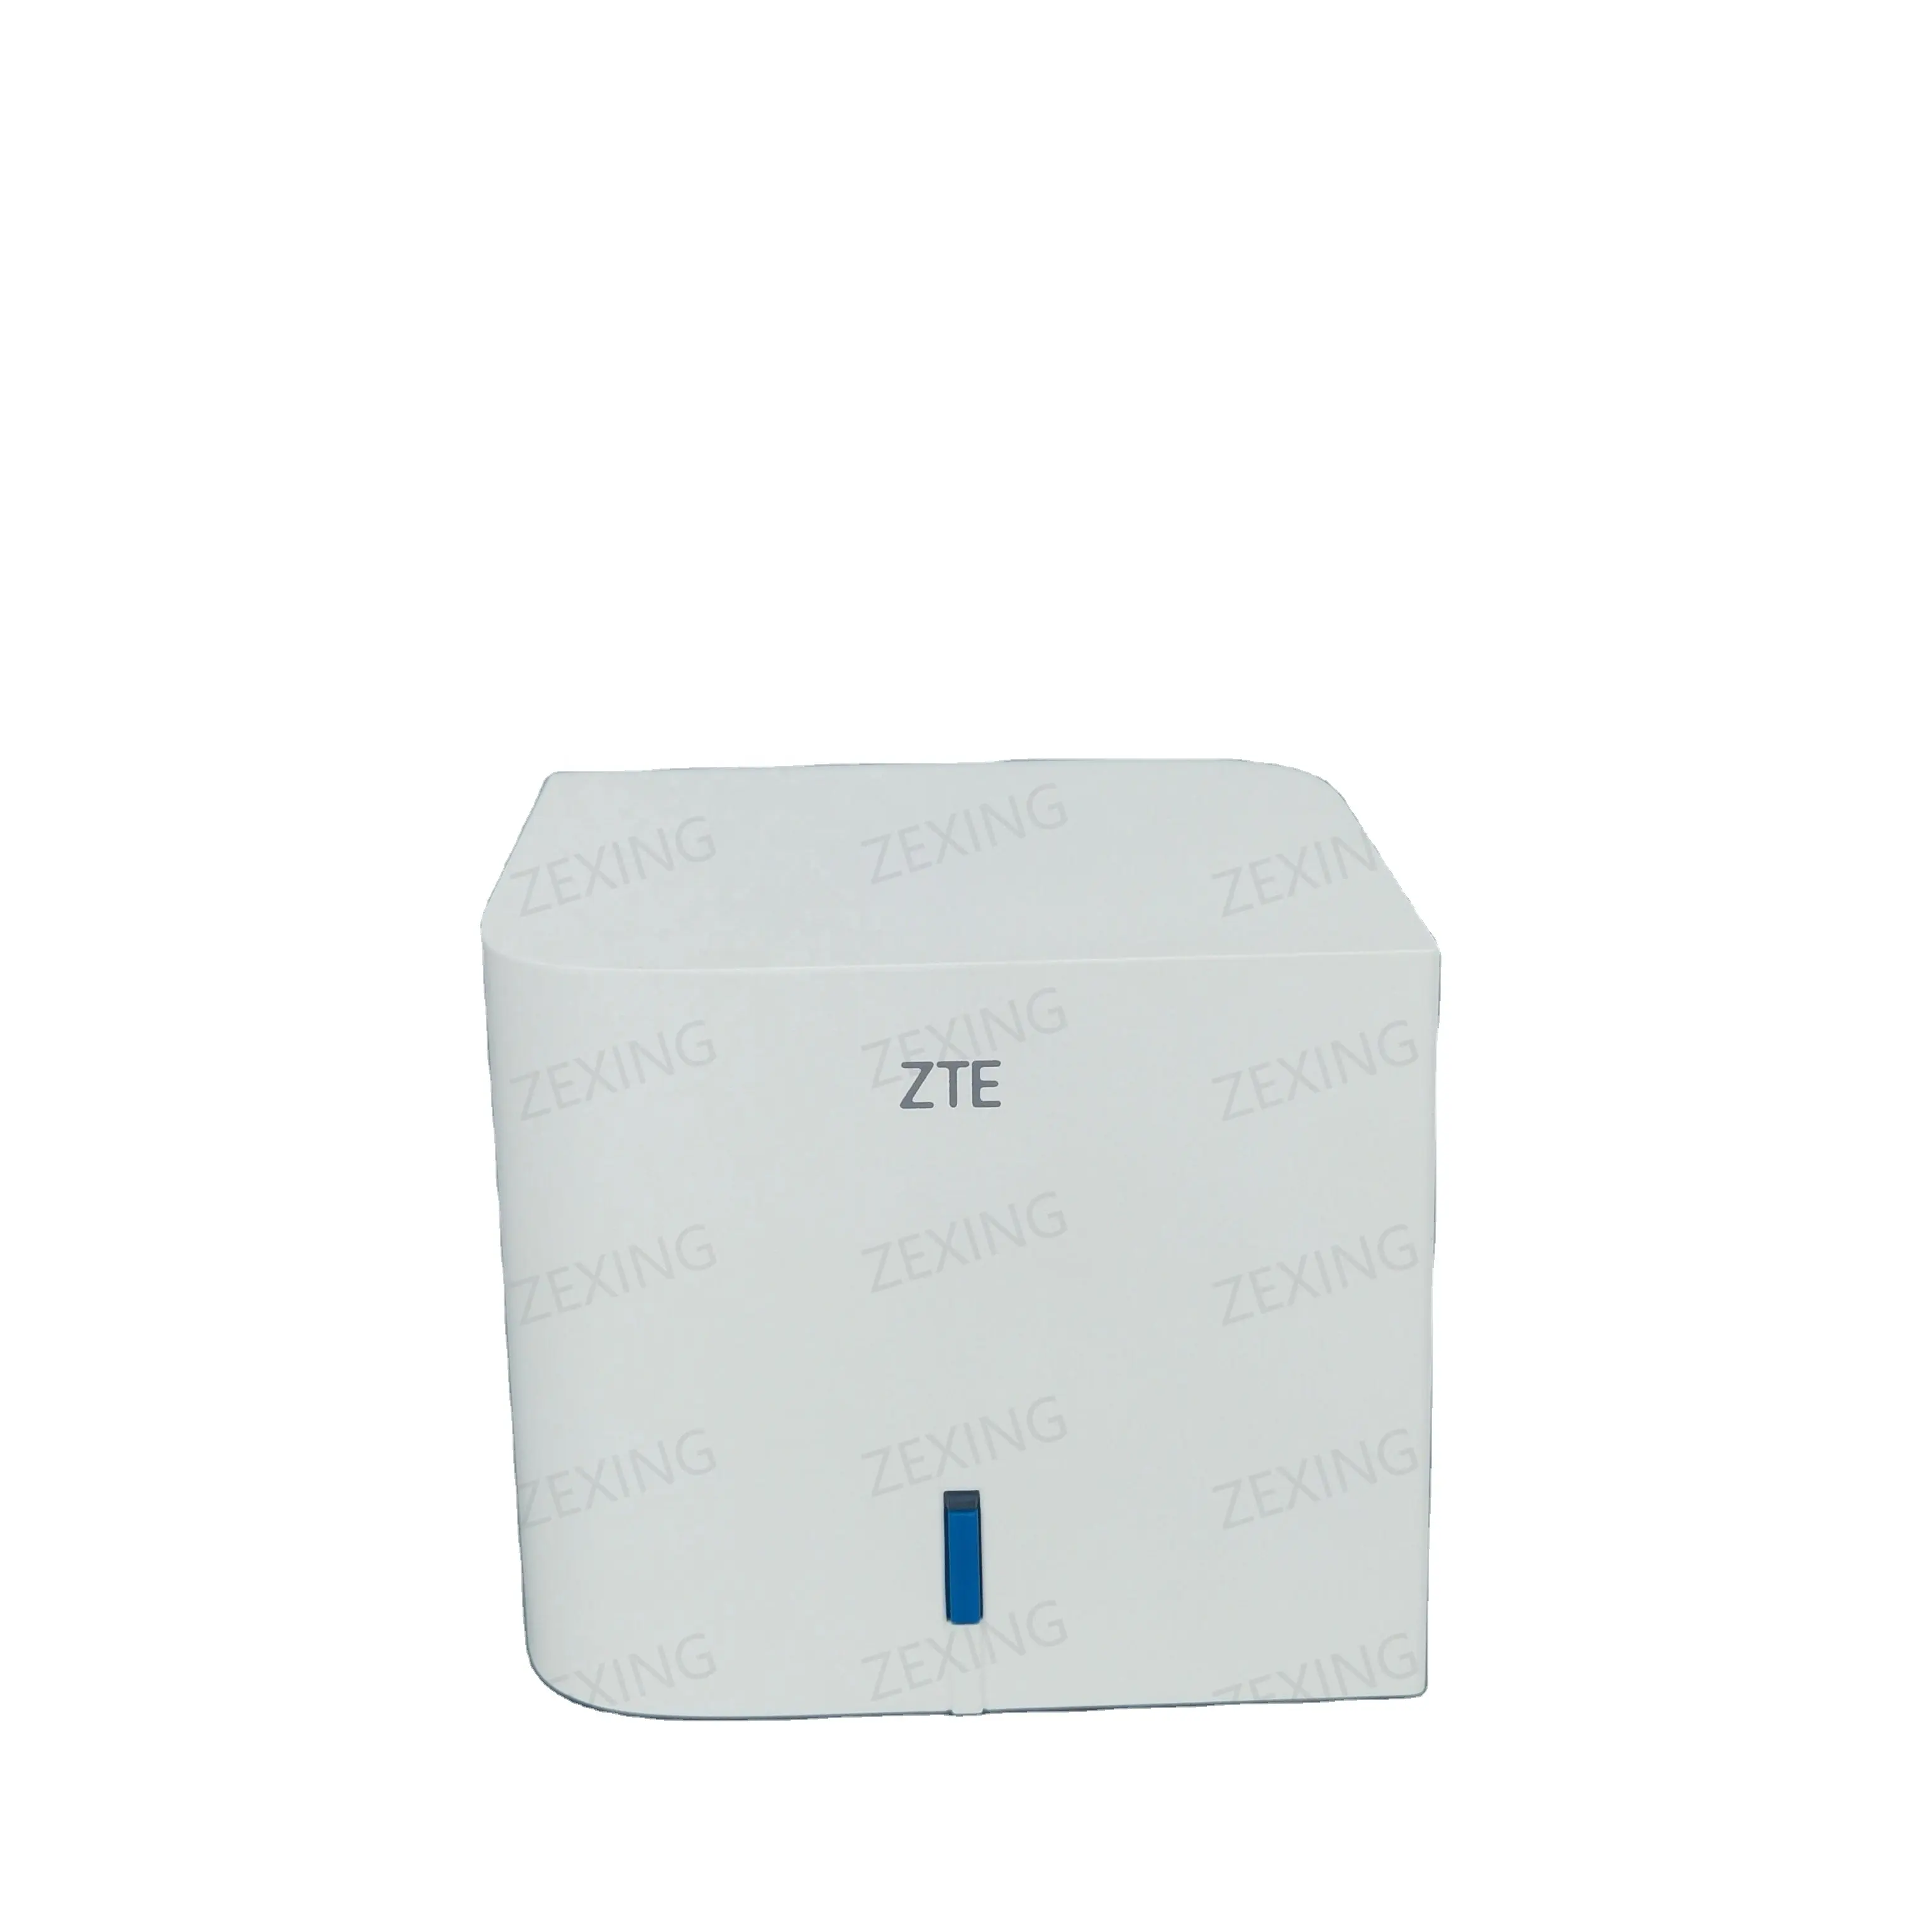 ZXHN H196A AC1200 gigabit dual band 1GE WAN+2GE LAN Mesh wifi router for ZTE router